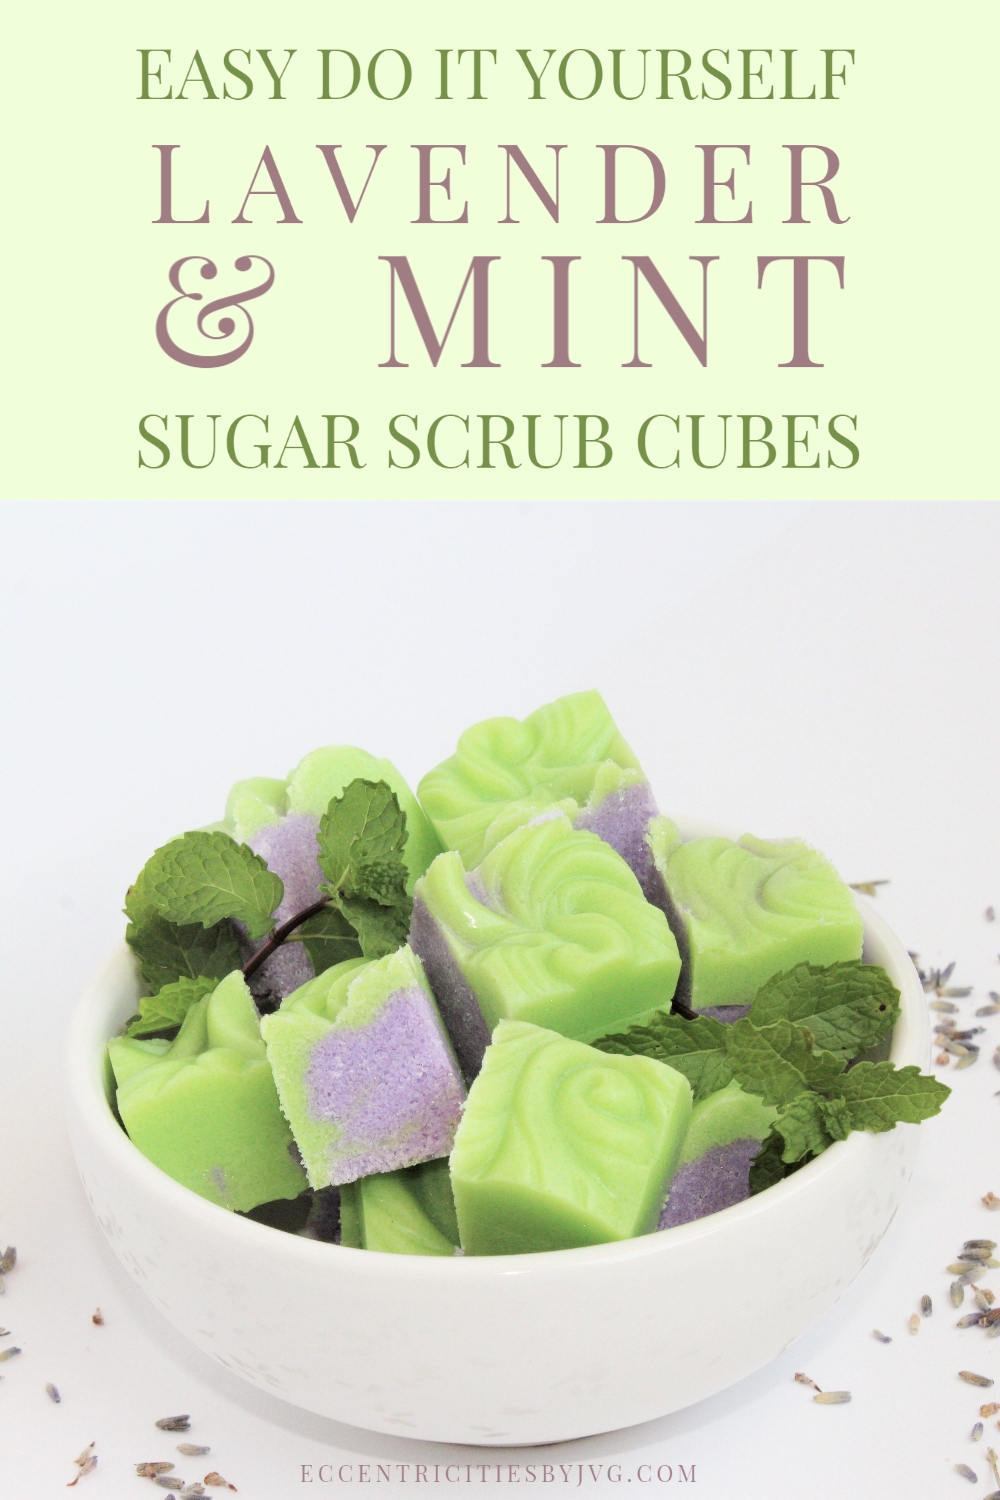 https://eccentricitiesbyjvg.com/wp-content/uploads/2020/08/Lavender-and-mint-sugar-scrub-cubes.jpg